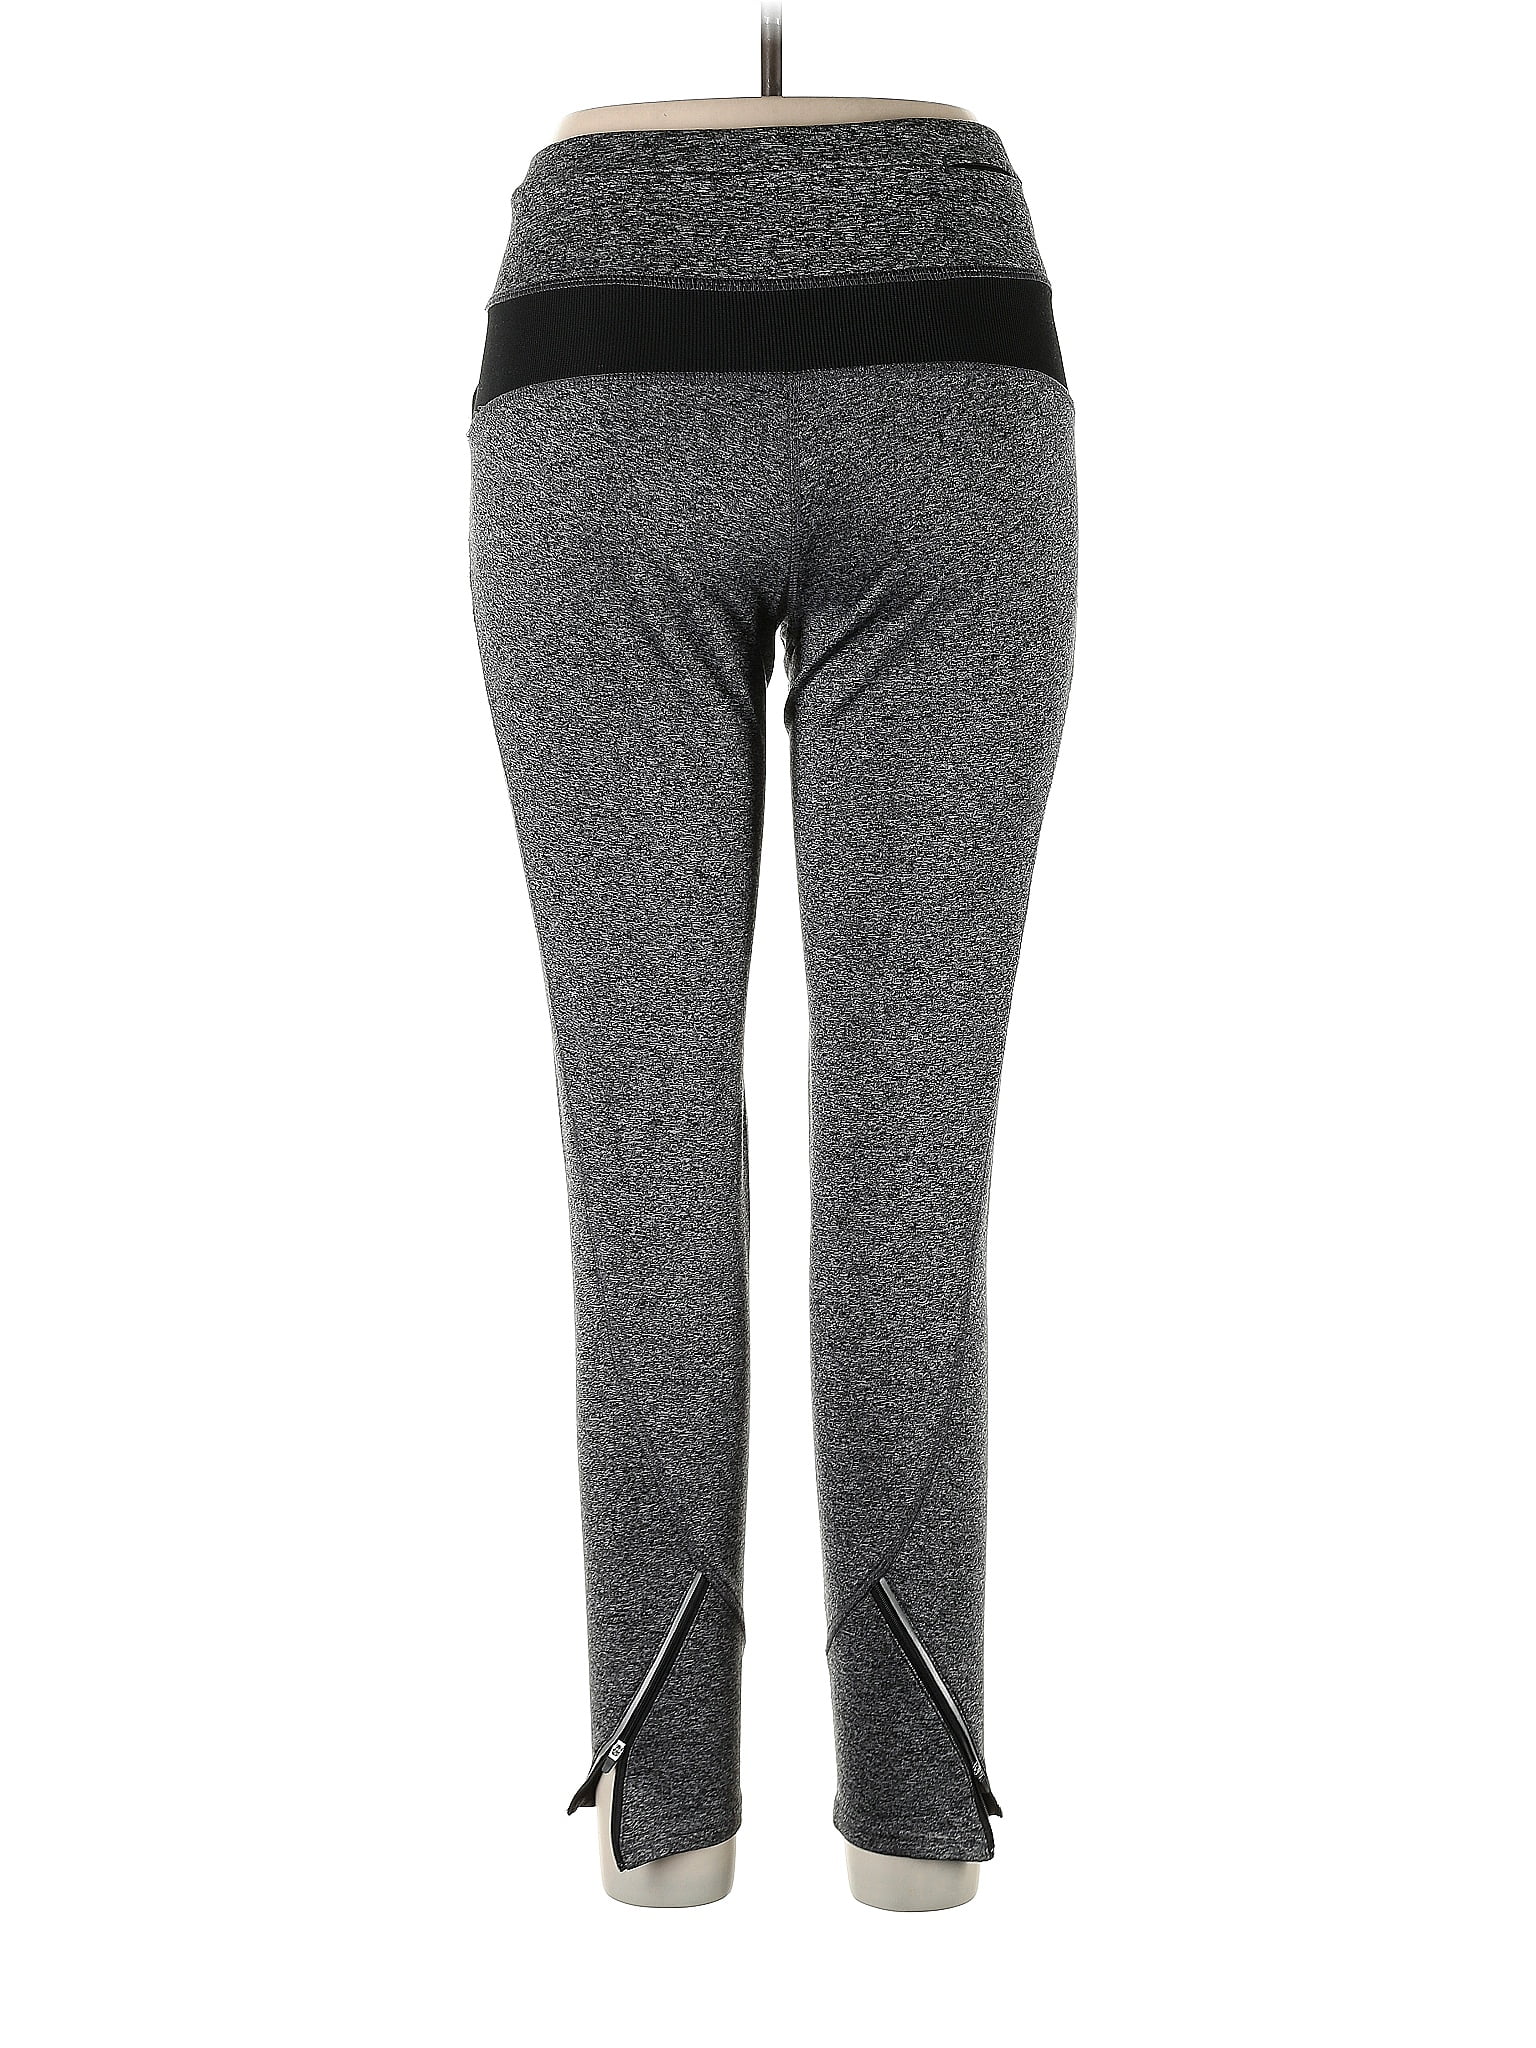 RBX Gray Active Pants Size L - 67% off